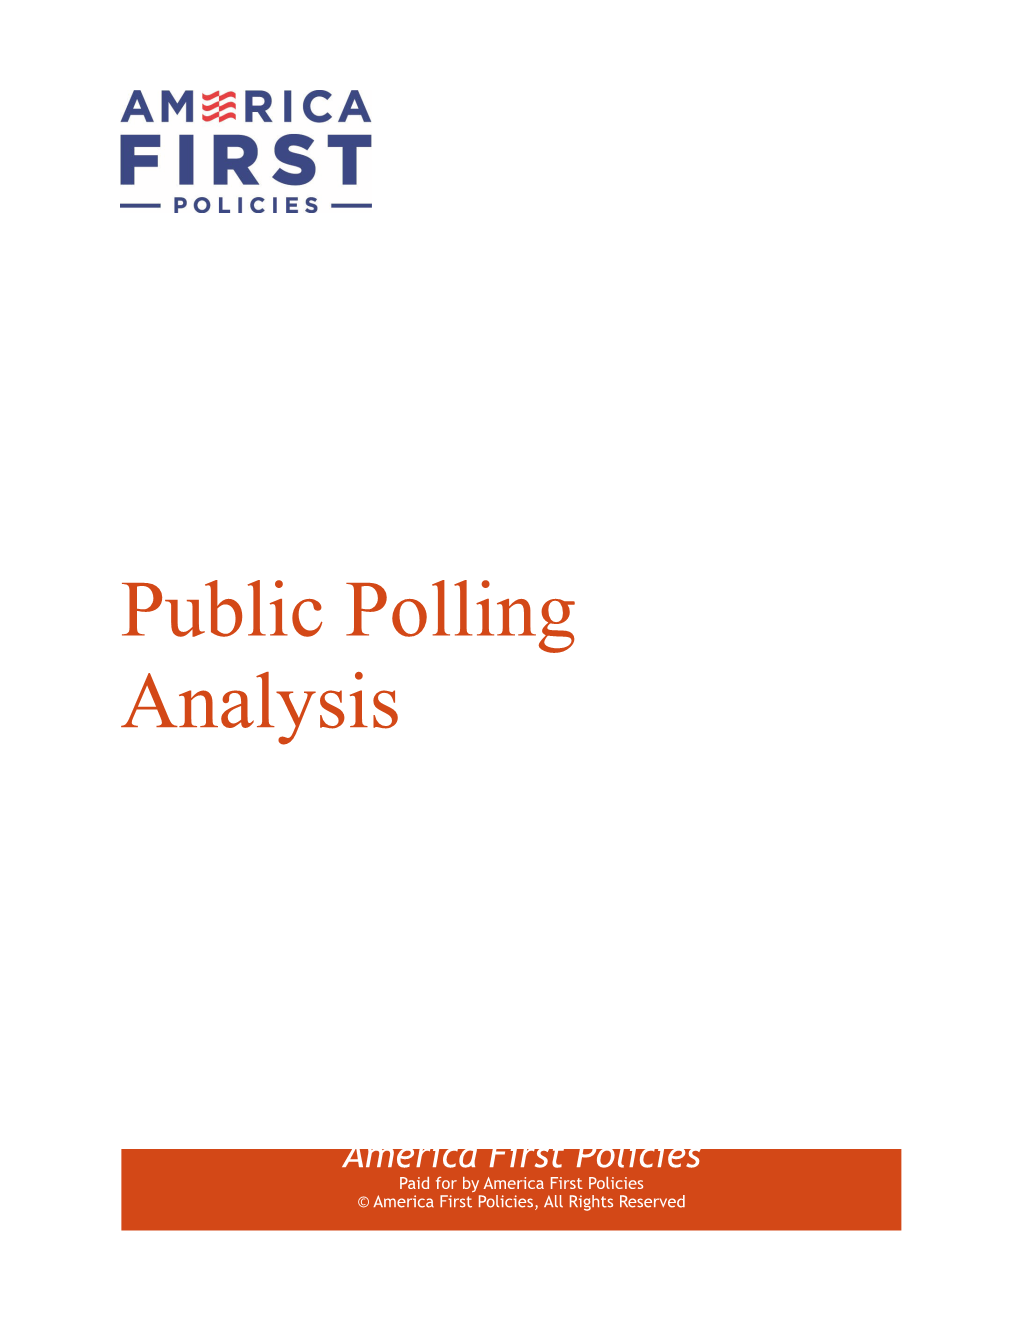 Public Polling Analysis 10.26